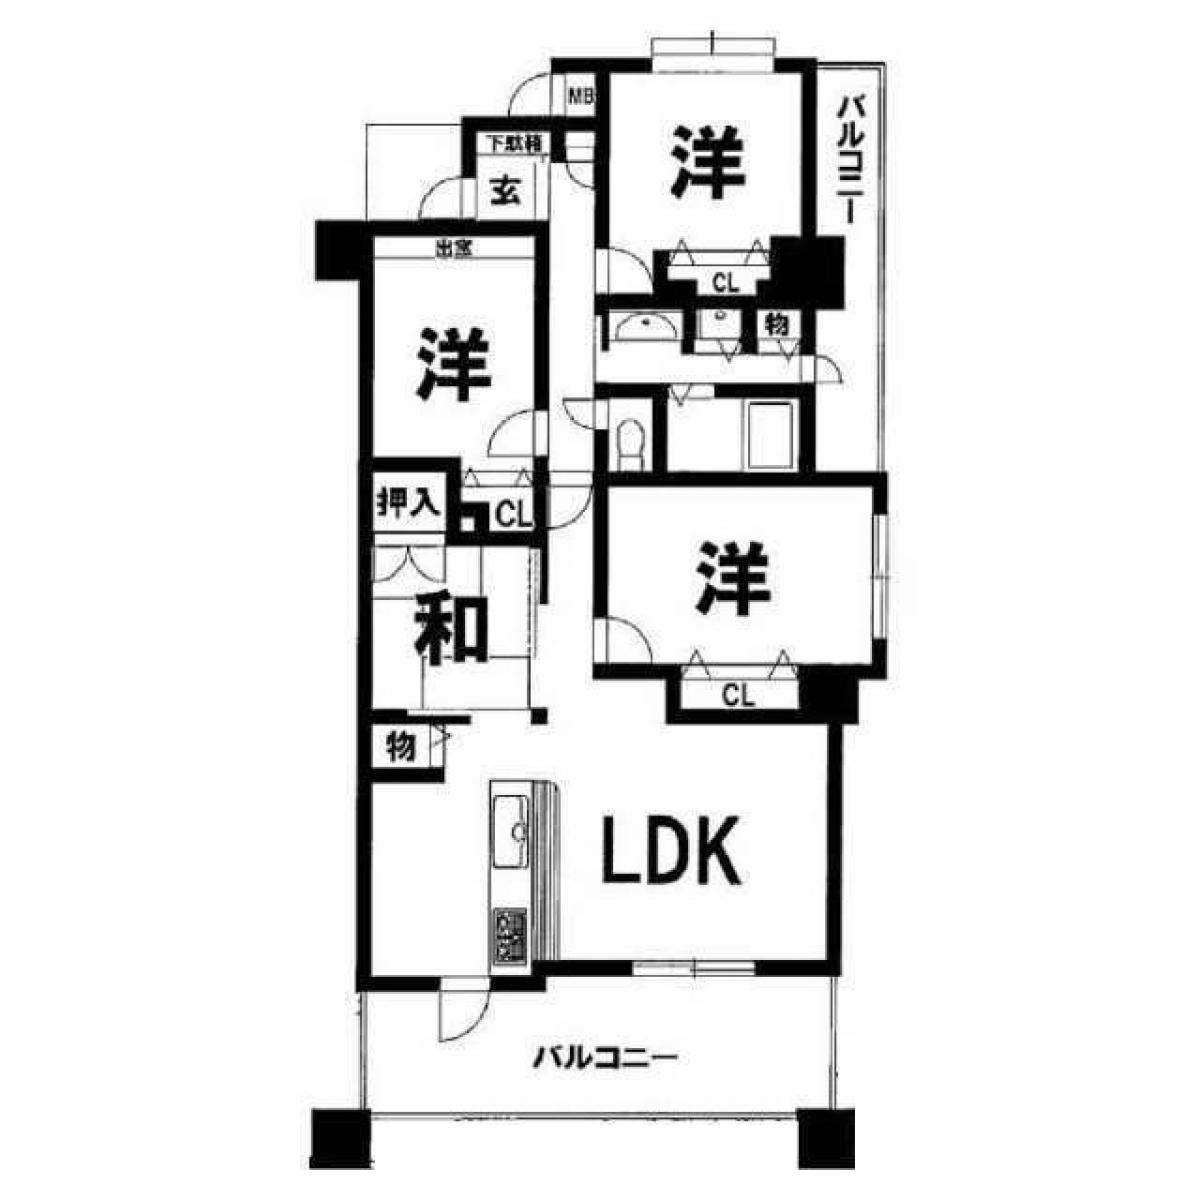 Picture of Apartment For Sale in Kagoshima Shi, Kagoshima, Japan